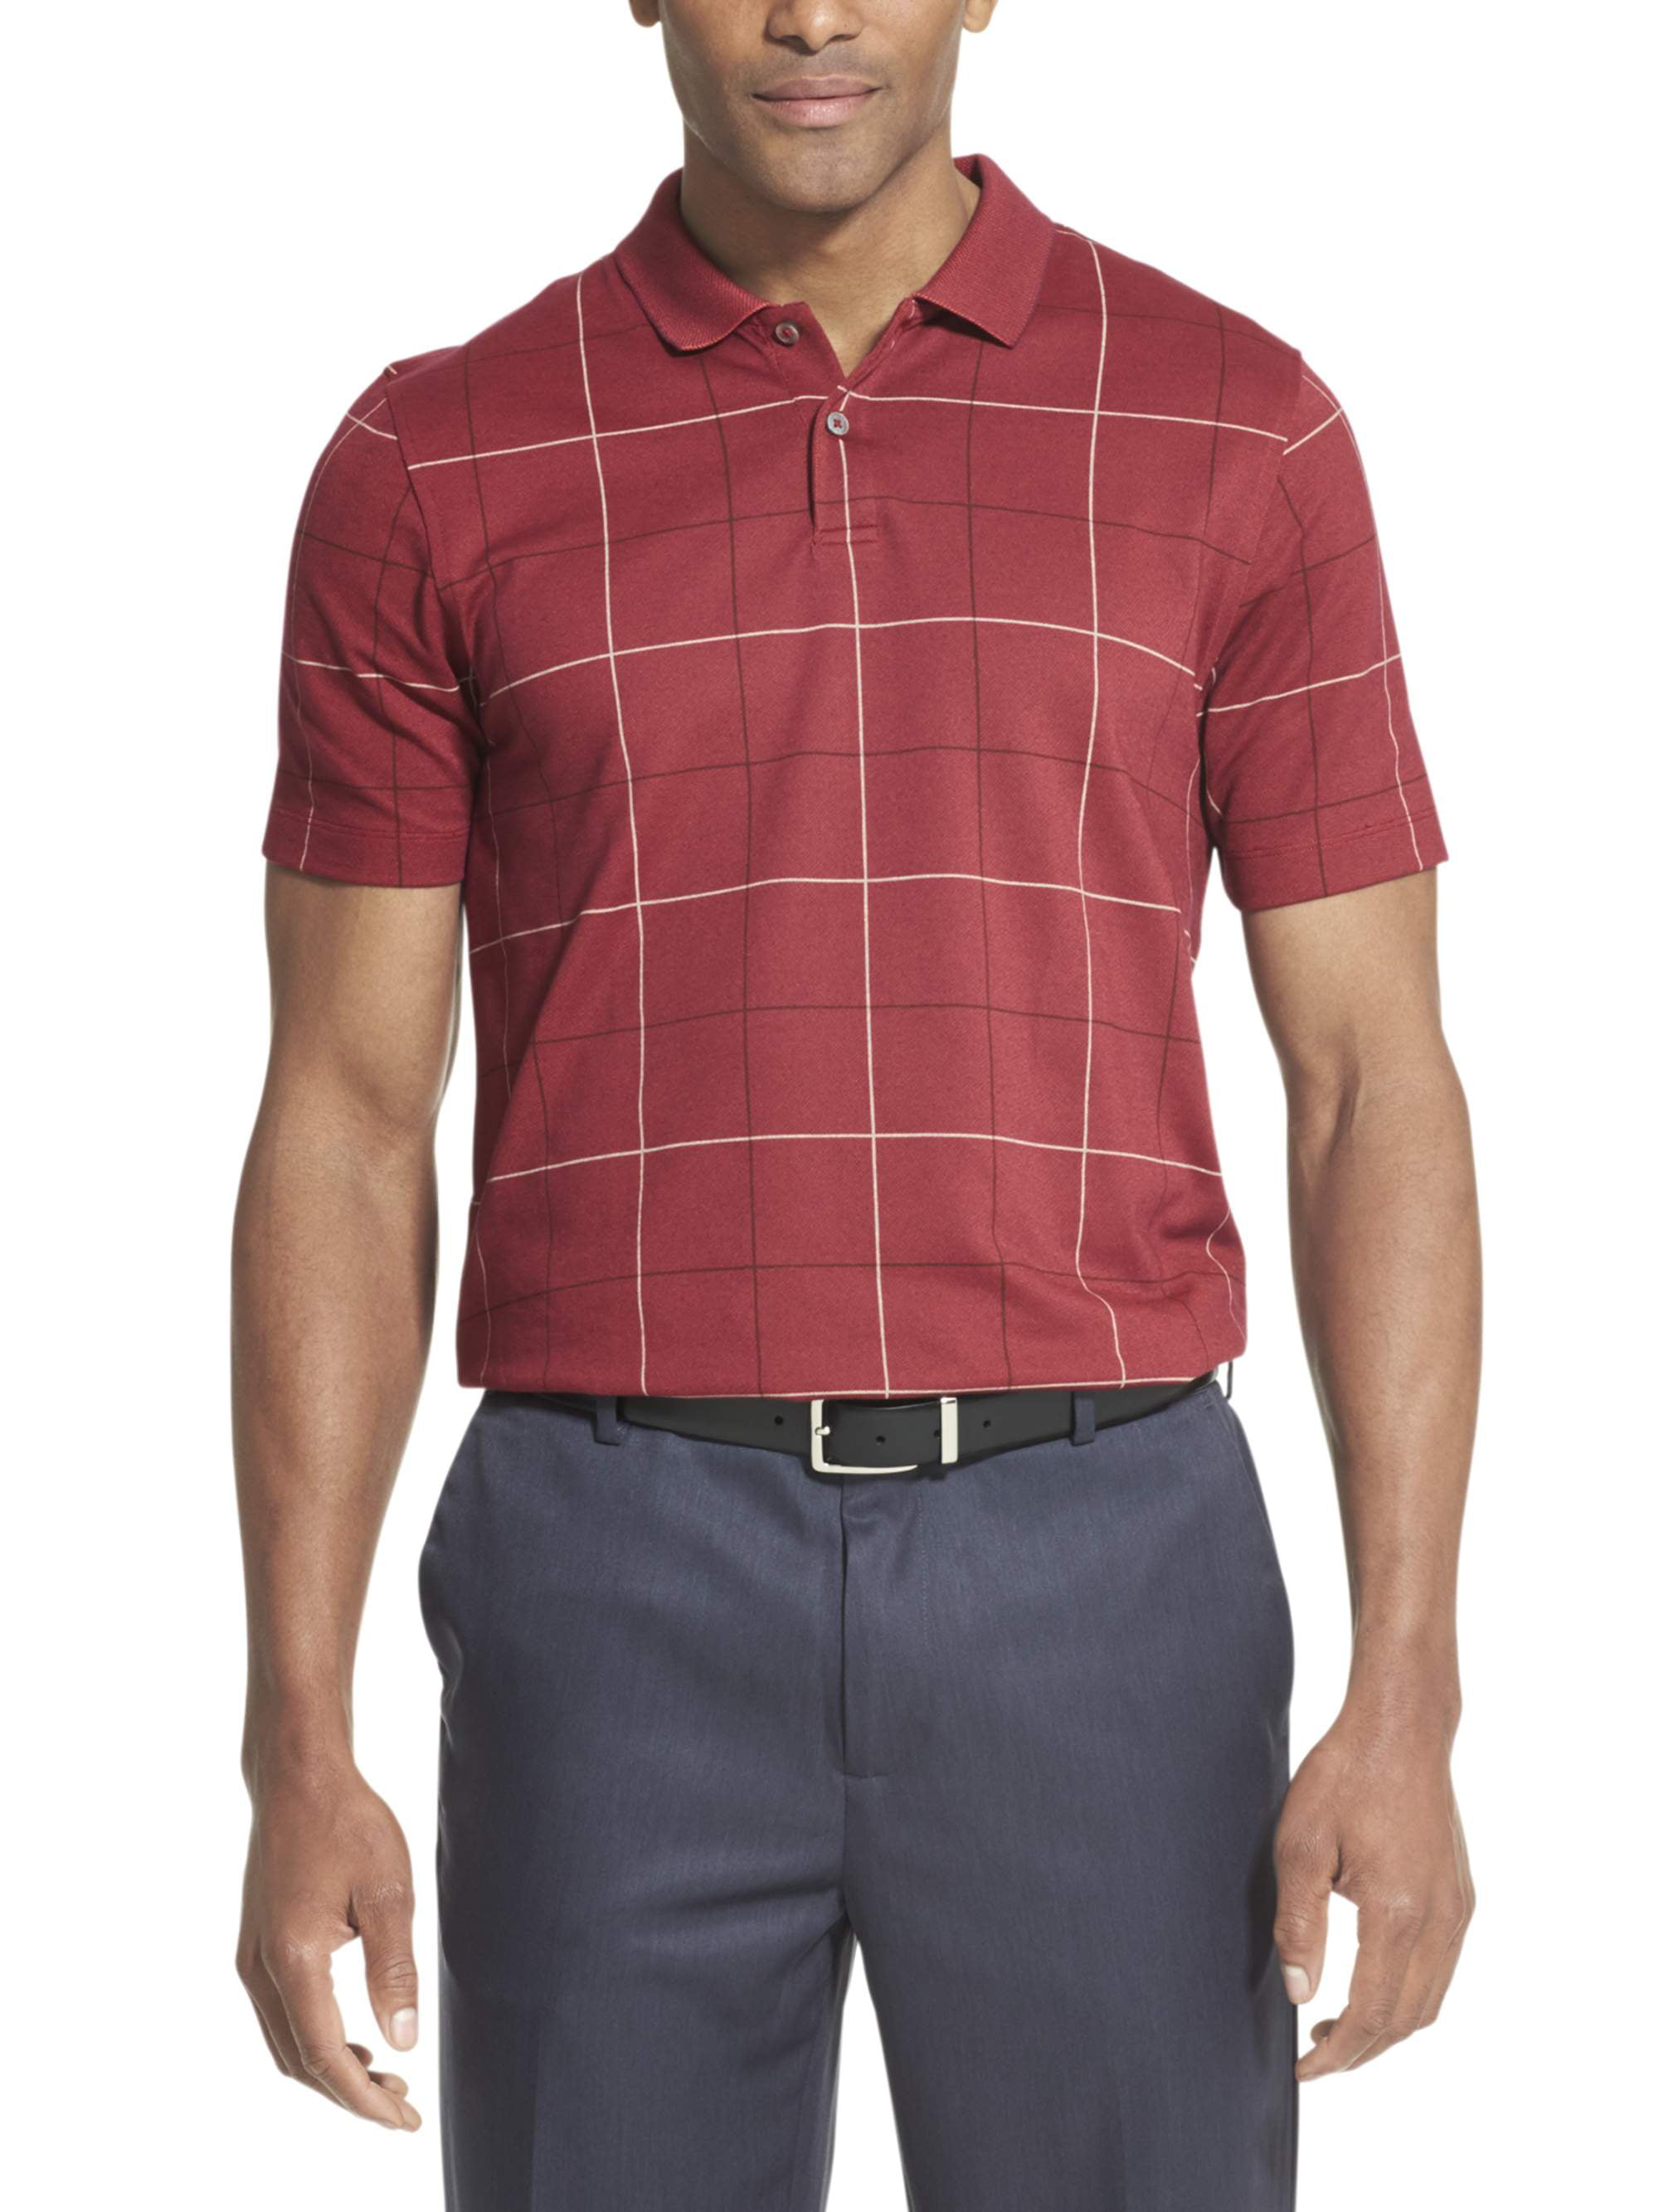 Van Heusen Mens Flex Short Sleeve Stretch Windowpane Polo Shirt Polo Shirt